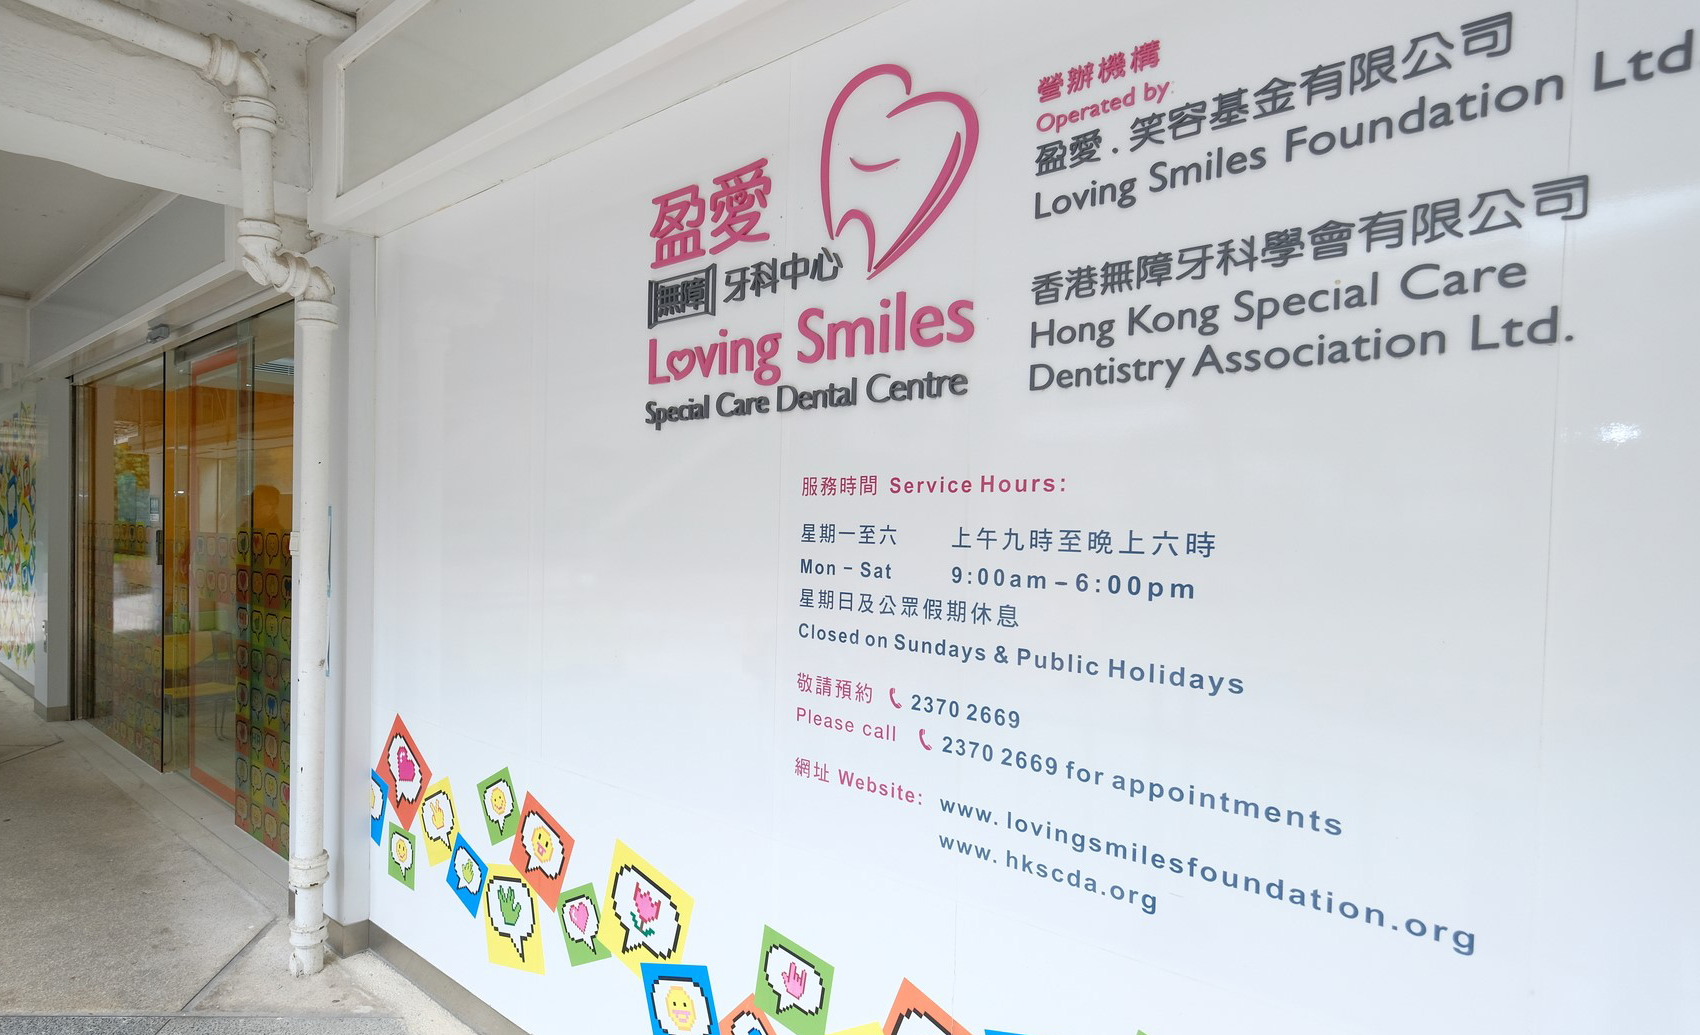 Loving Smiles Foundation Limited